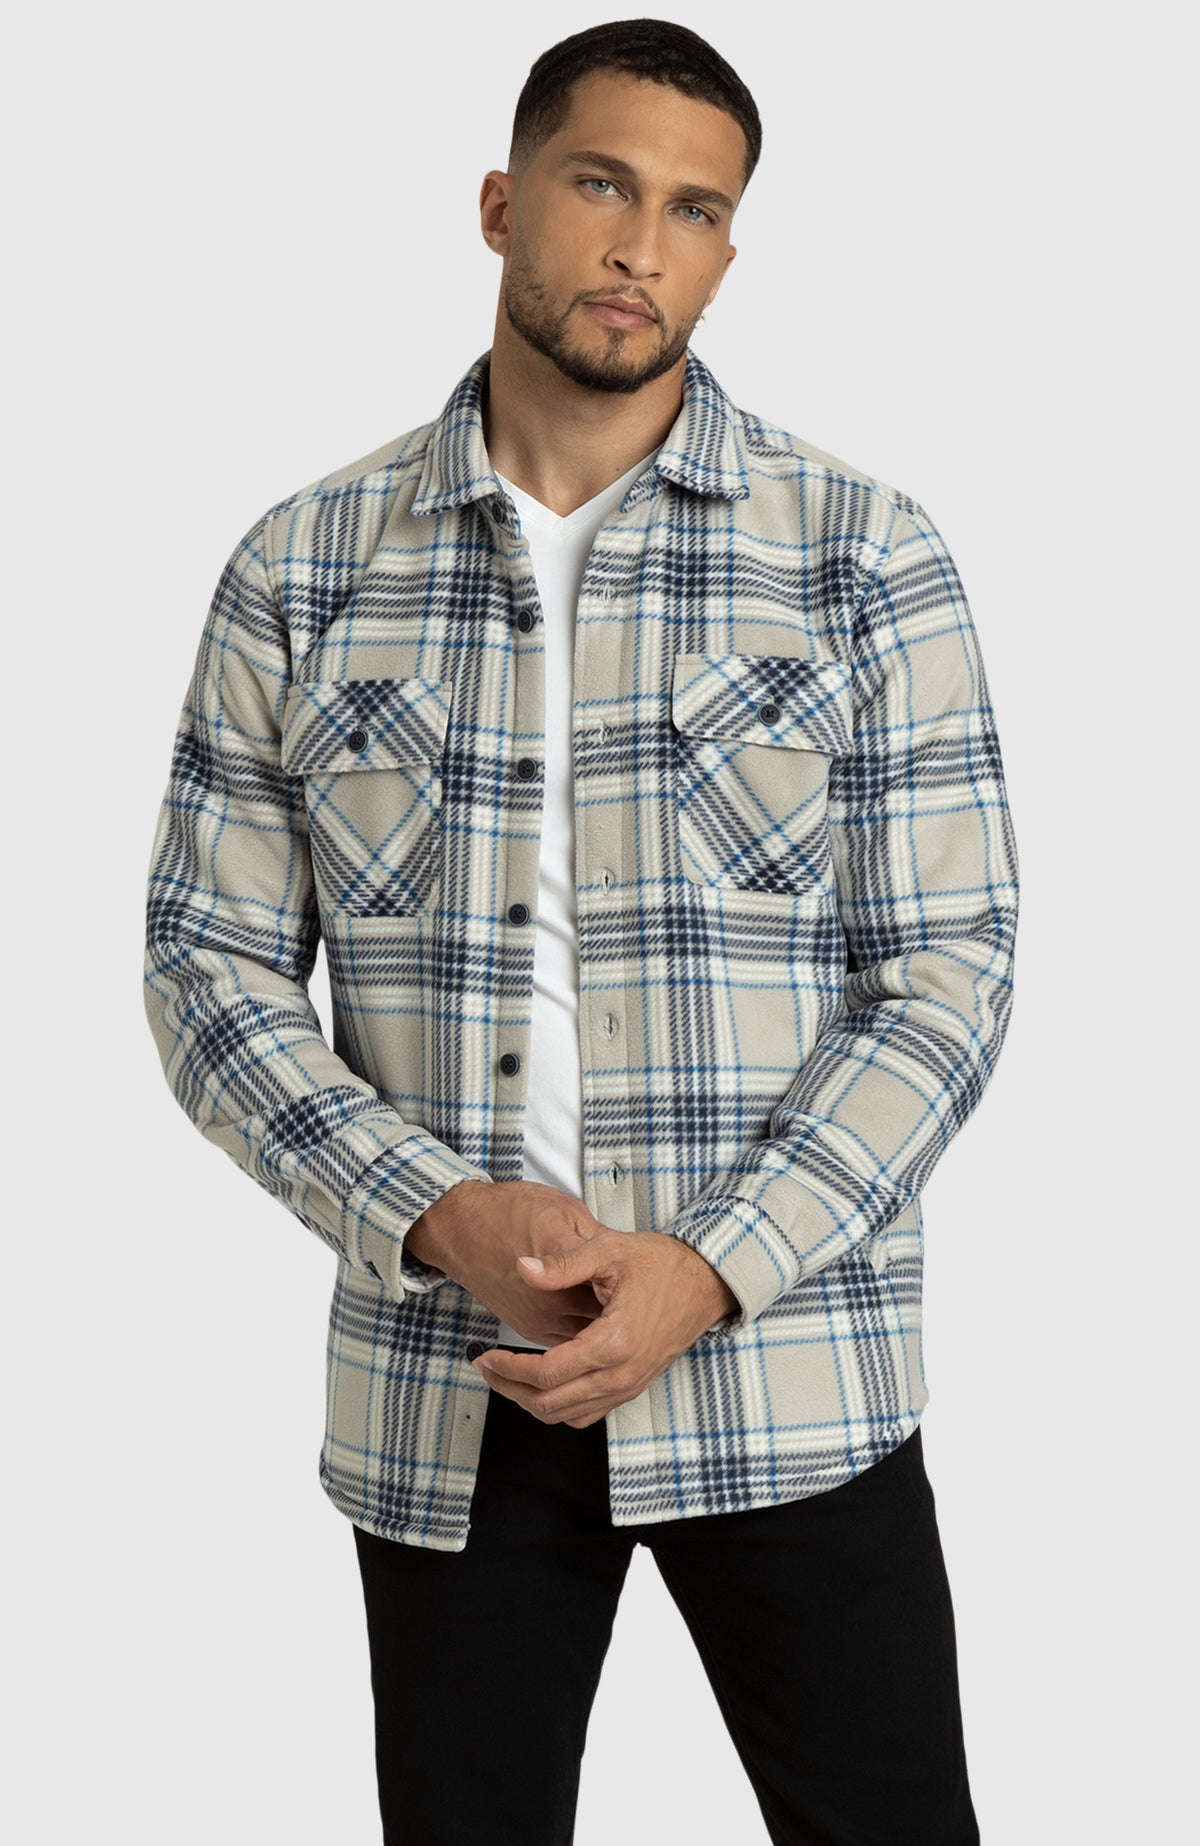 Men's Shirt Jackets & Shackets – Boston Traders